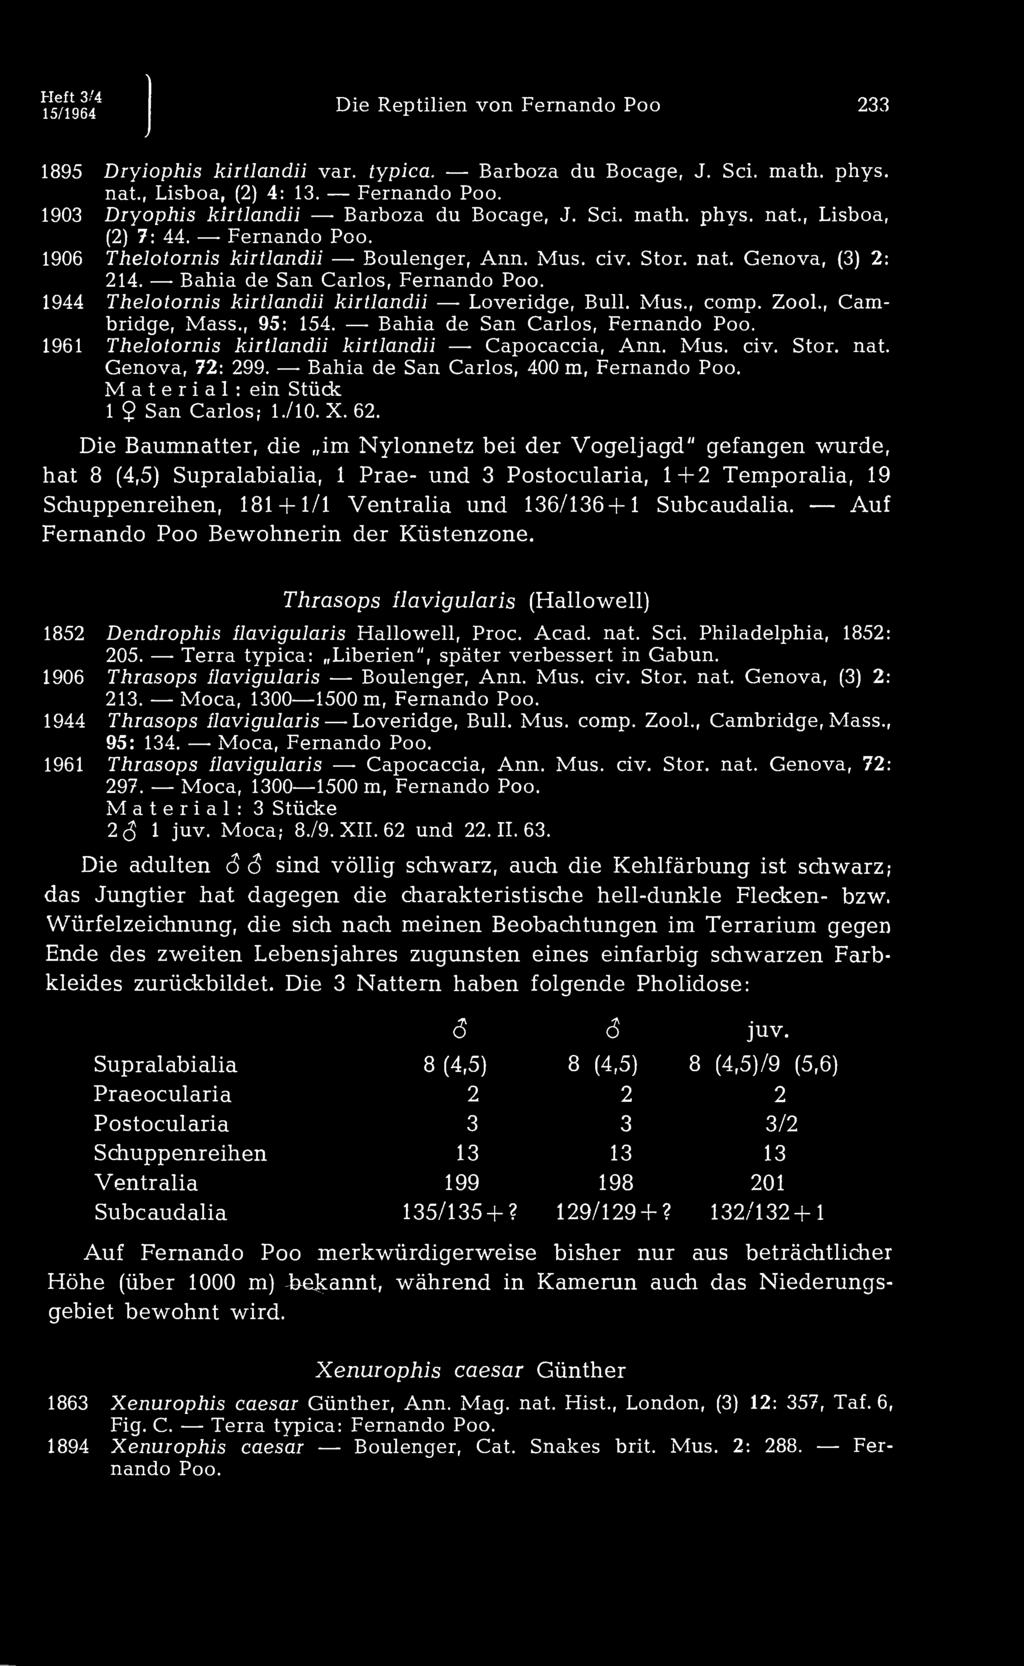 Fernando 1903 Dryophis kirtlandii Barboza du Bocage, J. Sei. math. phys. nat., Lisboa, (2) 7: 44. Fernando 1906 Thelotornis kirtlandii Boulenger, Ann. Mus. civ. Stor. nat. Genova, (3) 2: 214.